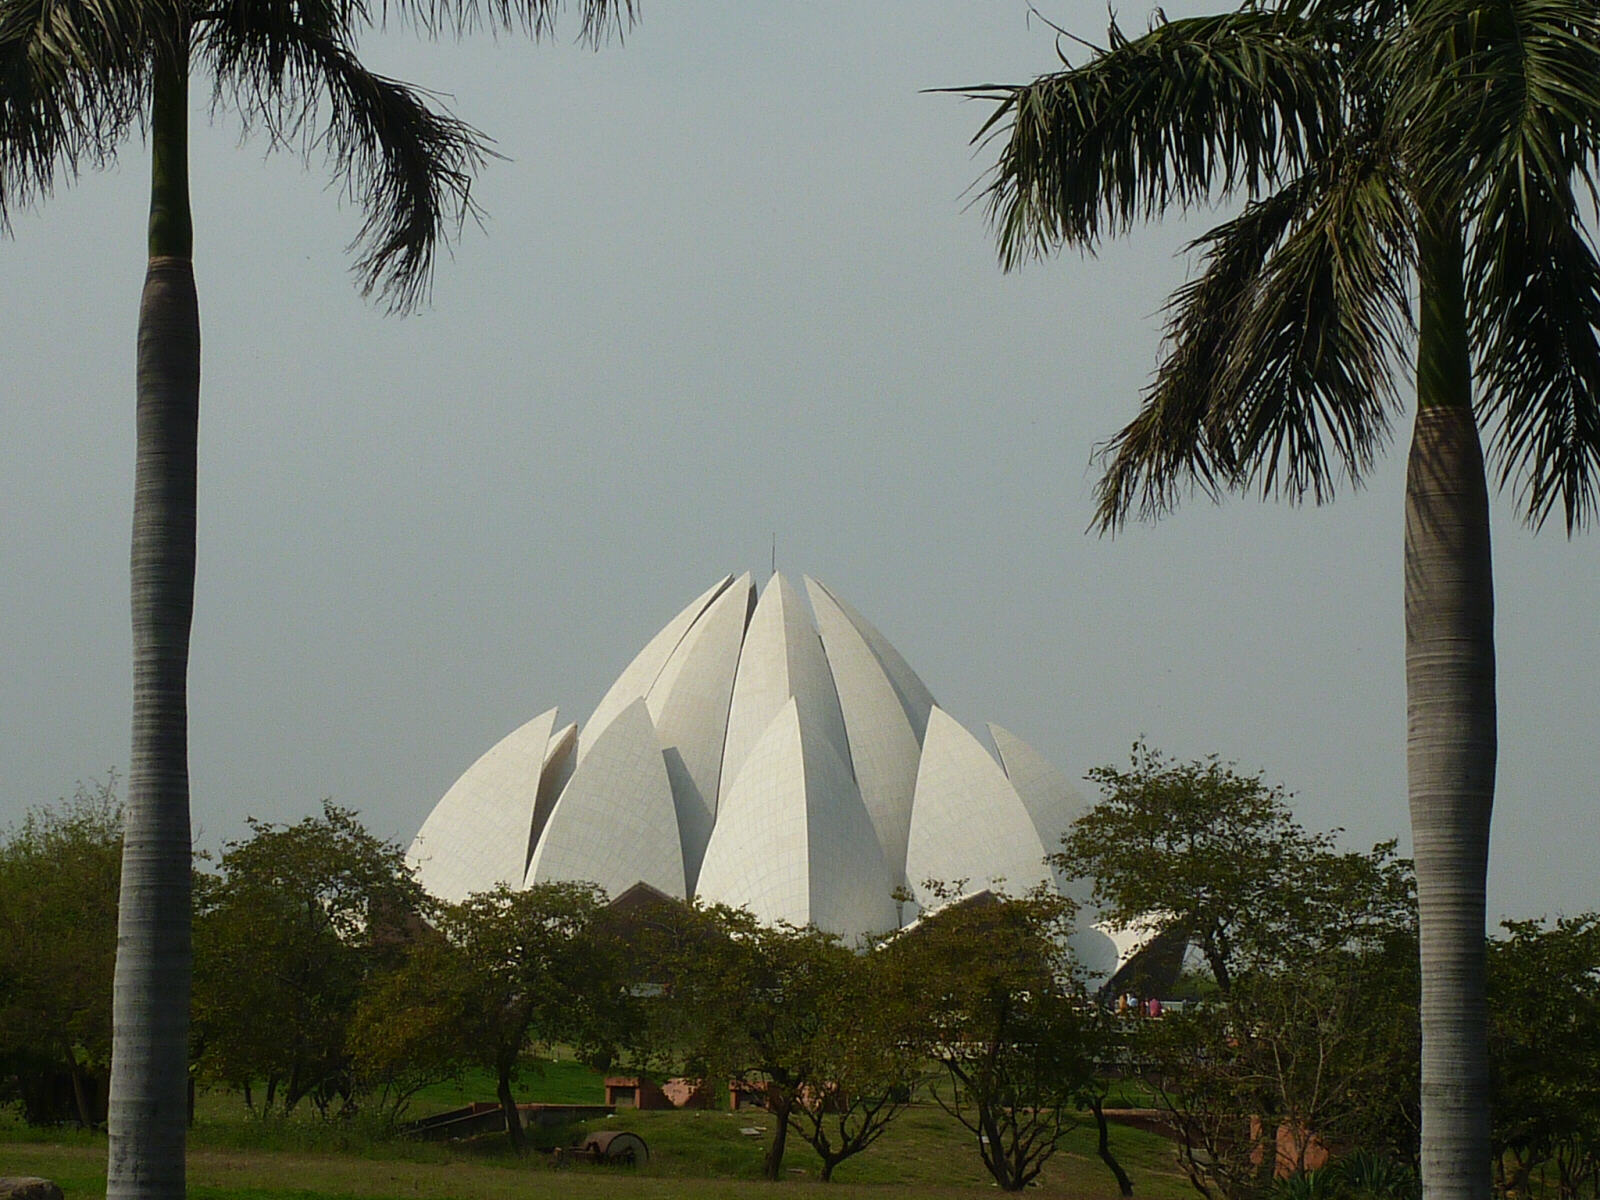 The Baha'i Lotus temple in Delhi, India